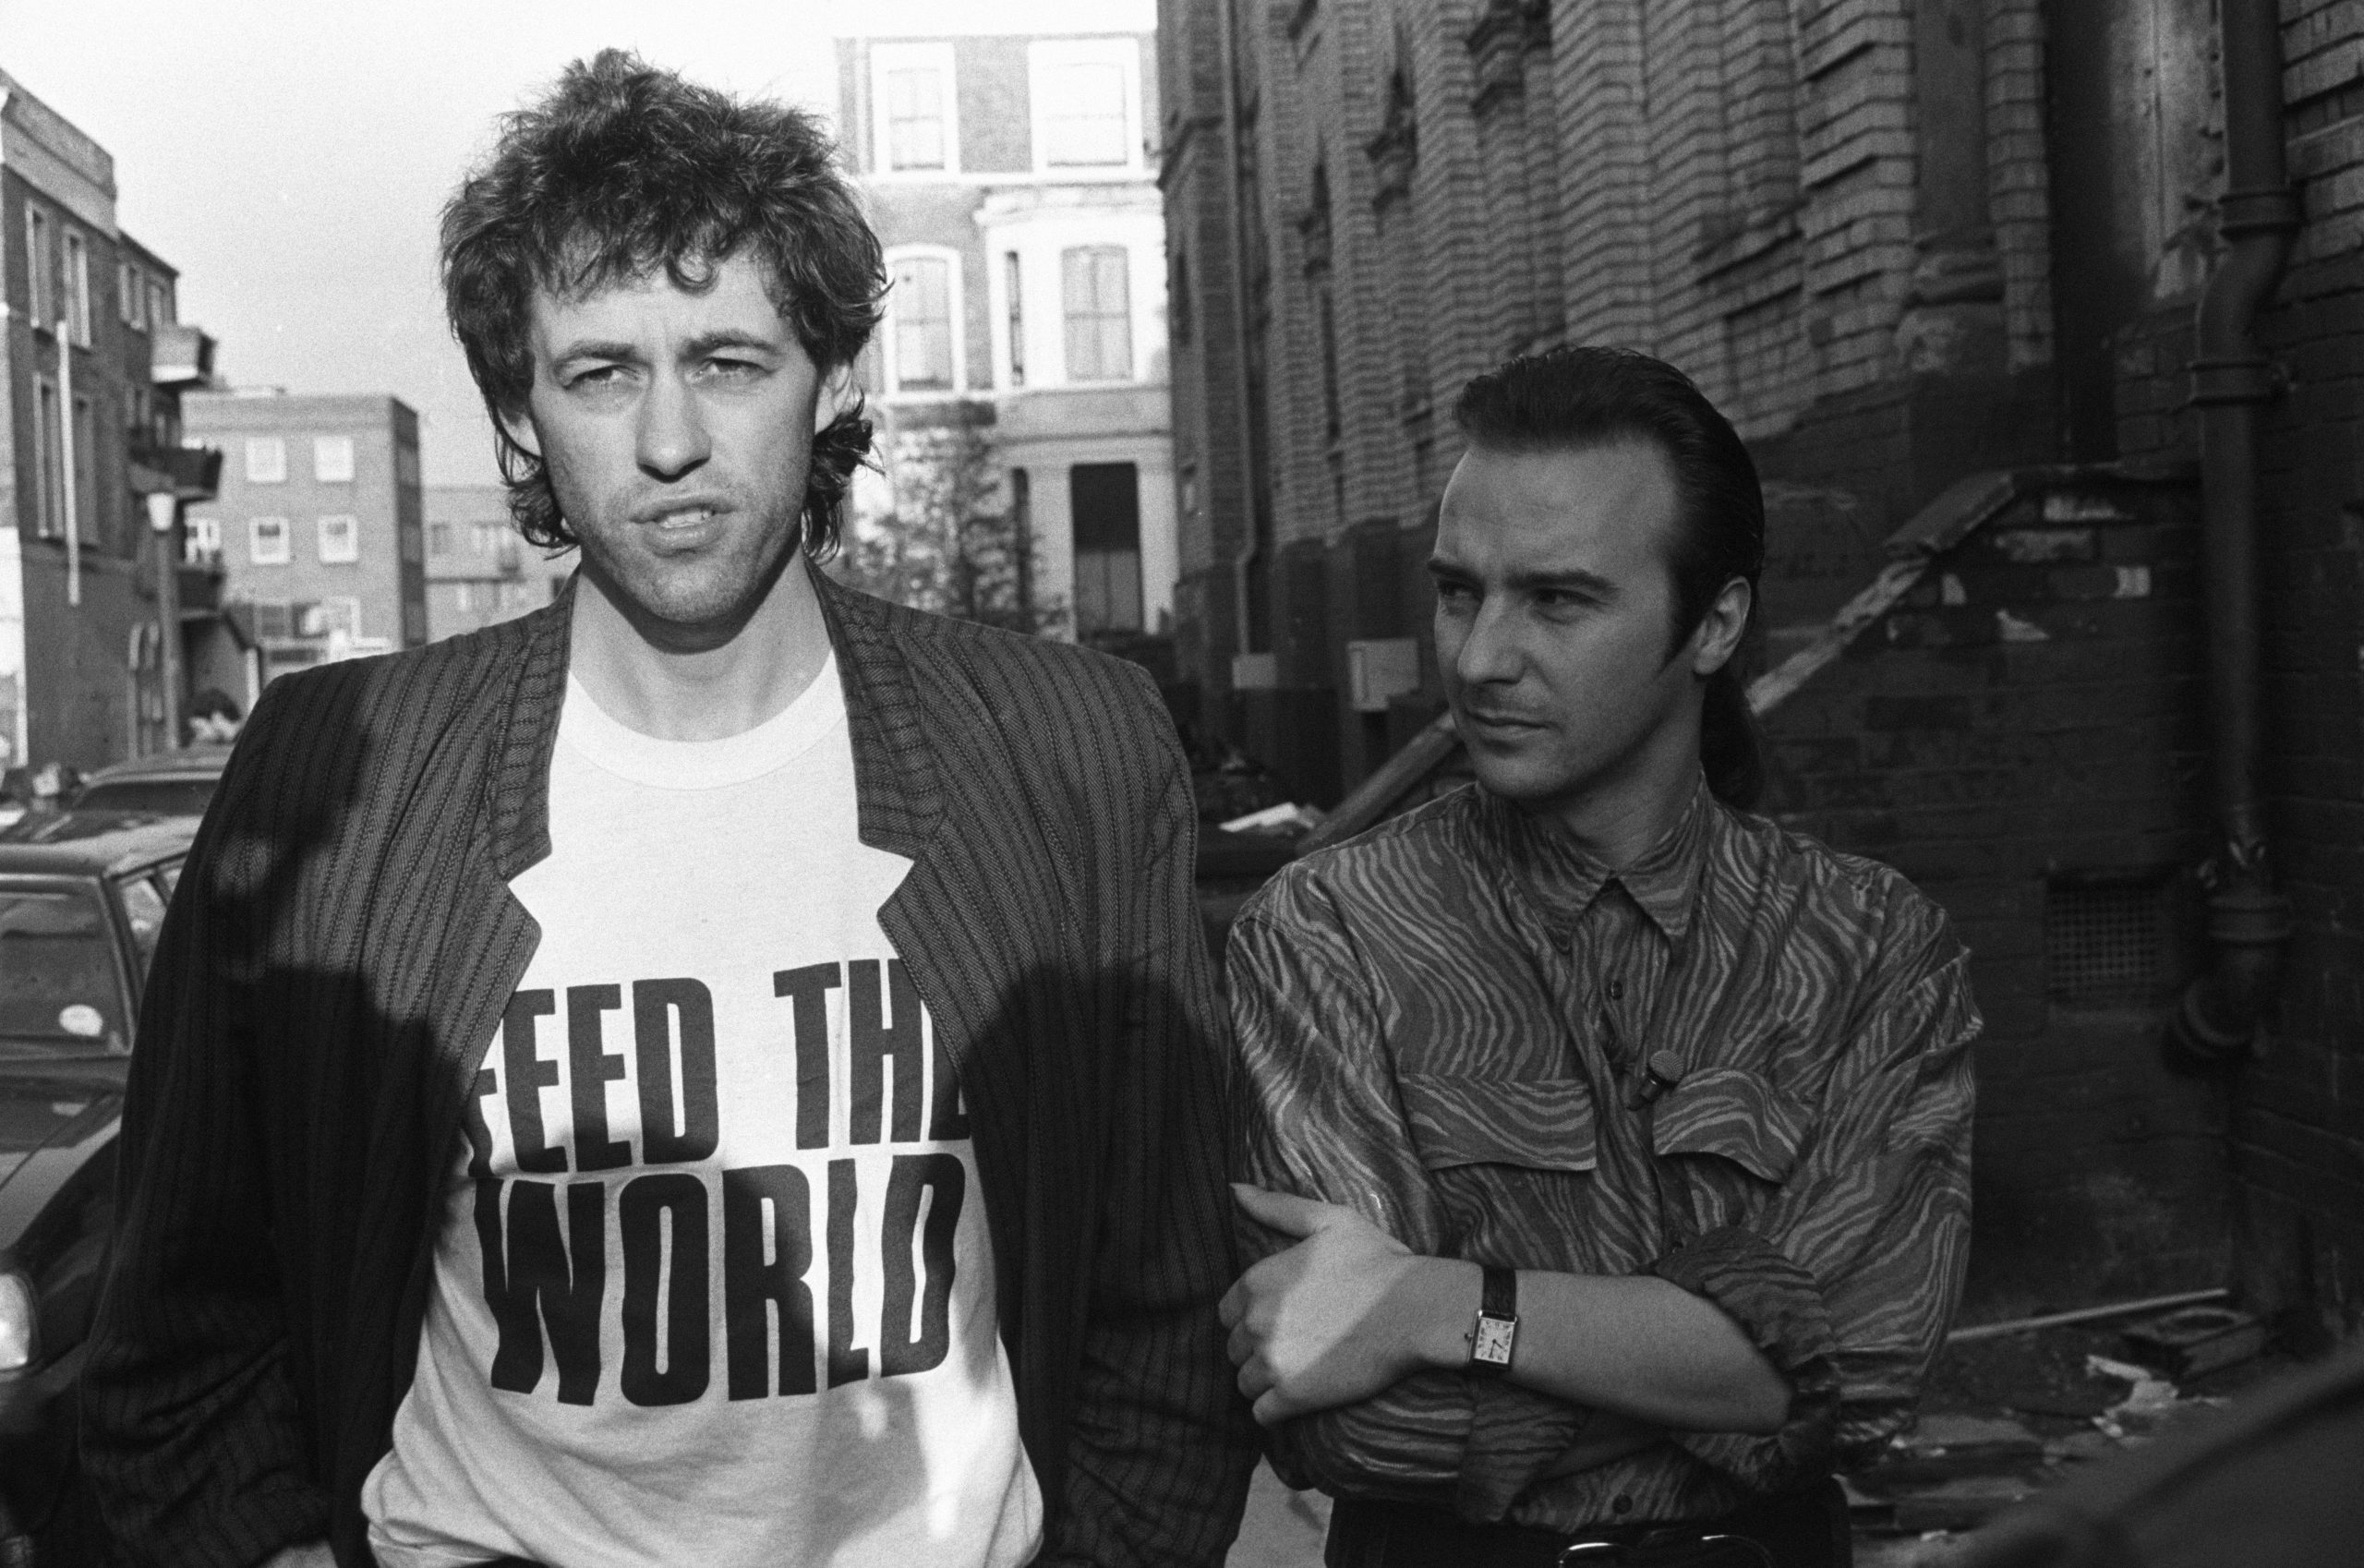 Bob Geldof photo